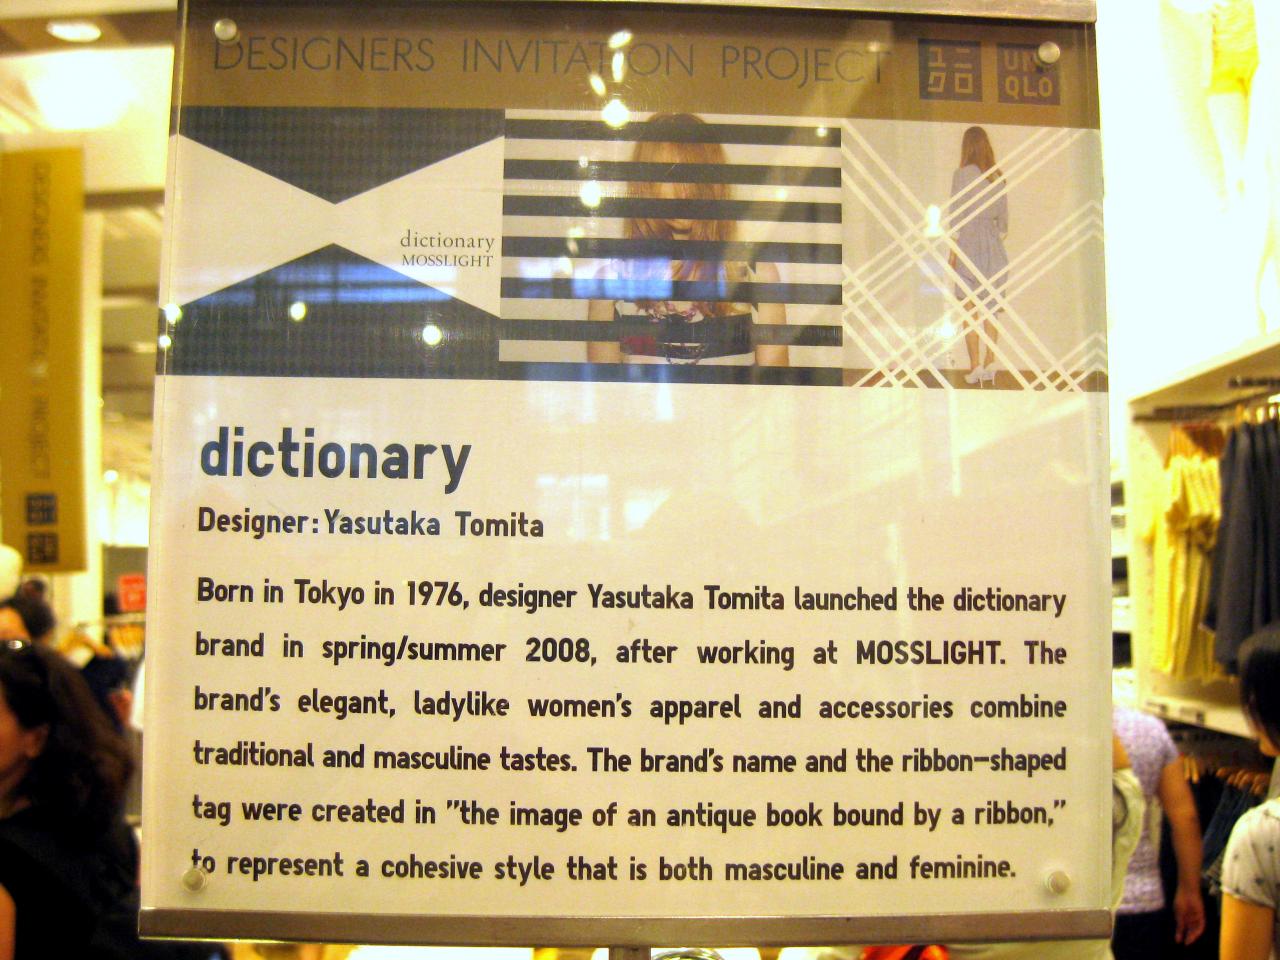 Dictionary, by Yasutaka Tomita